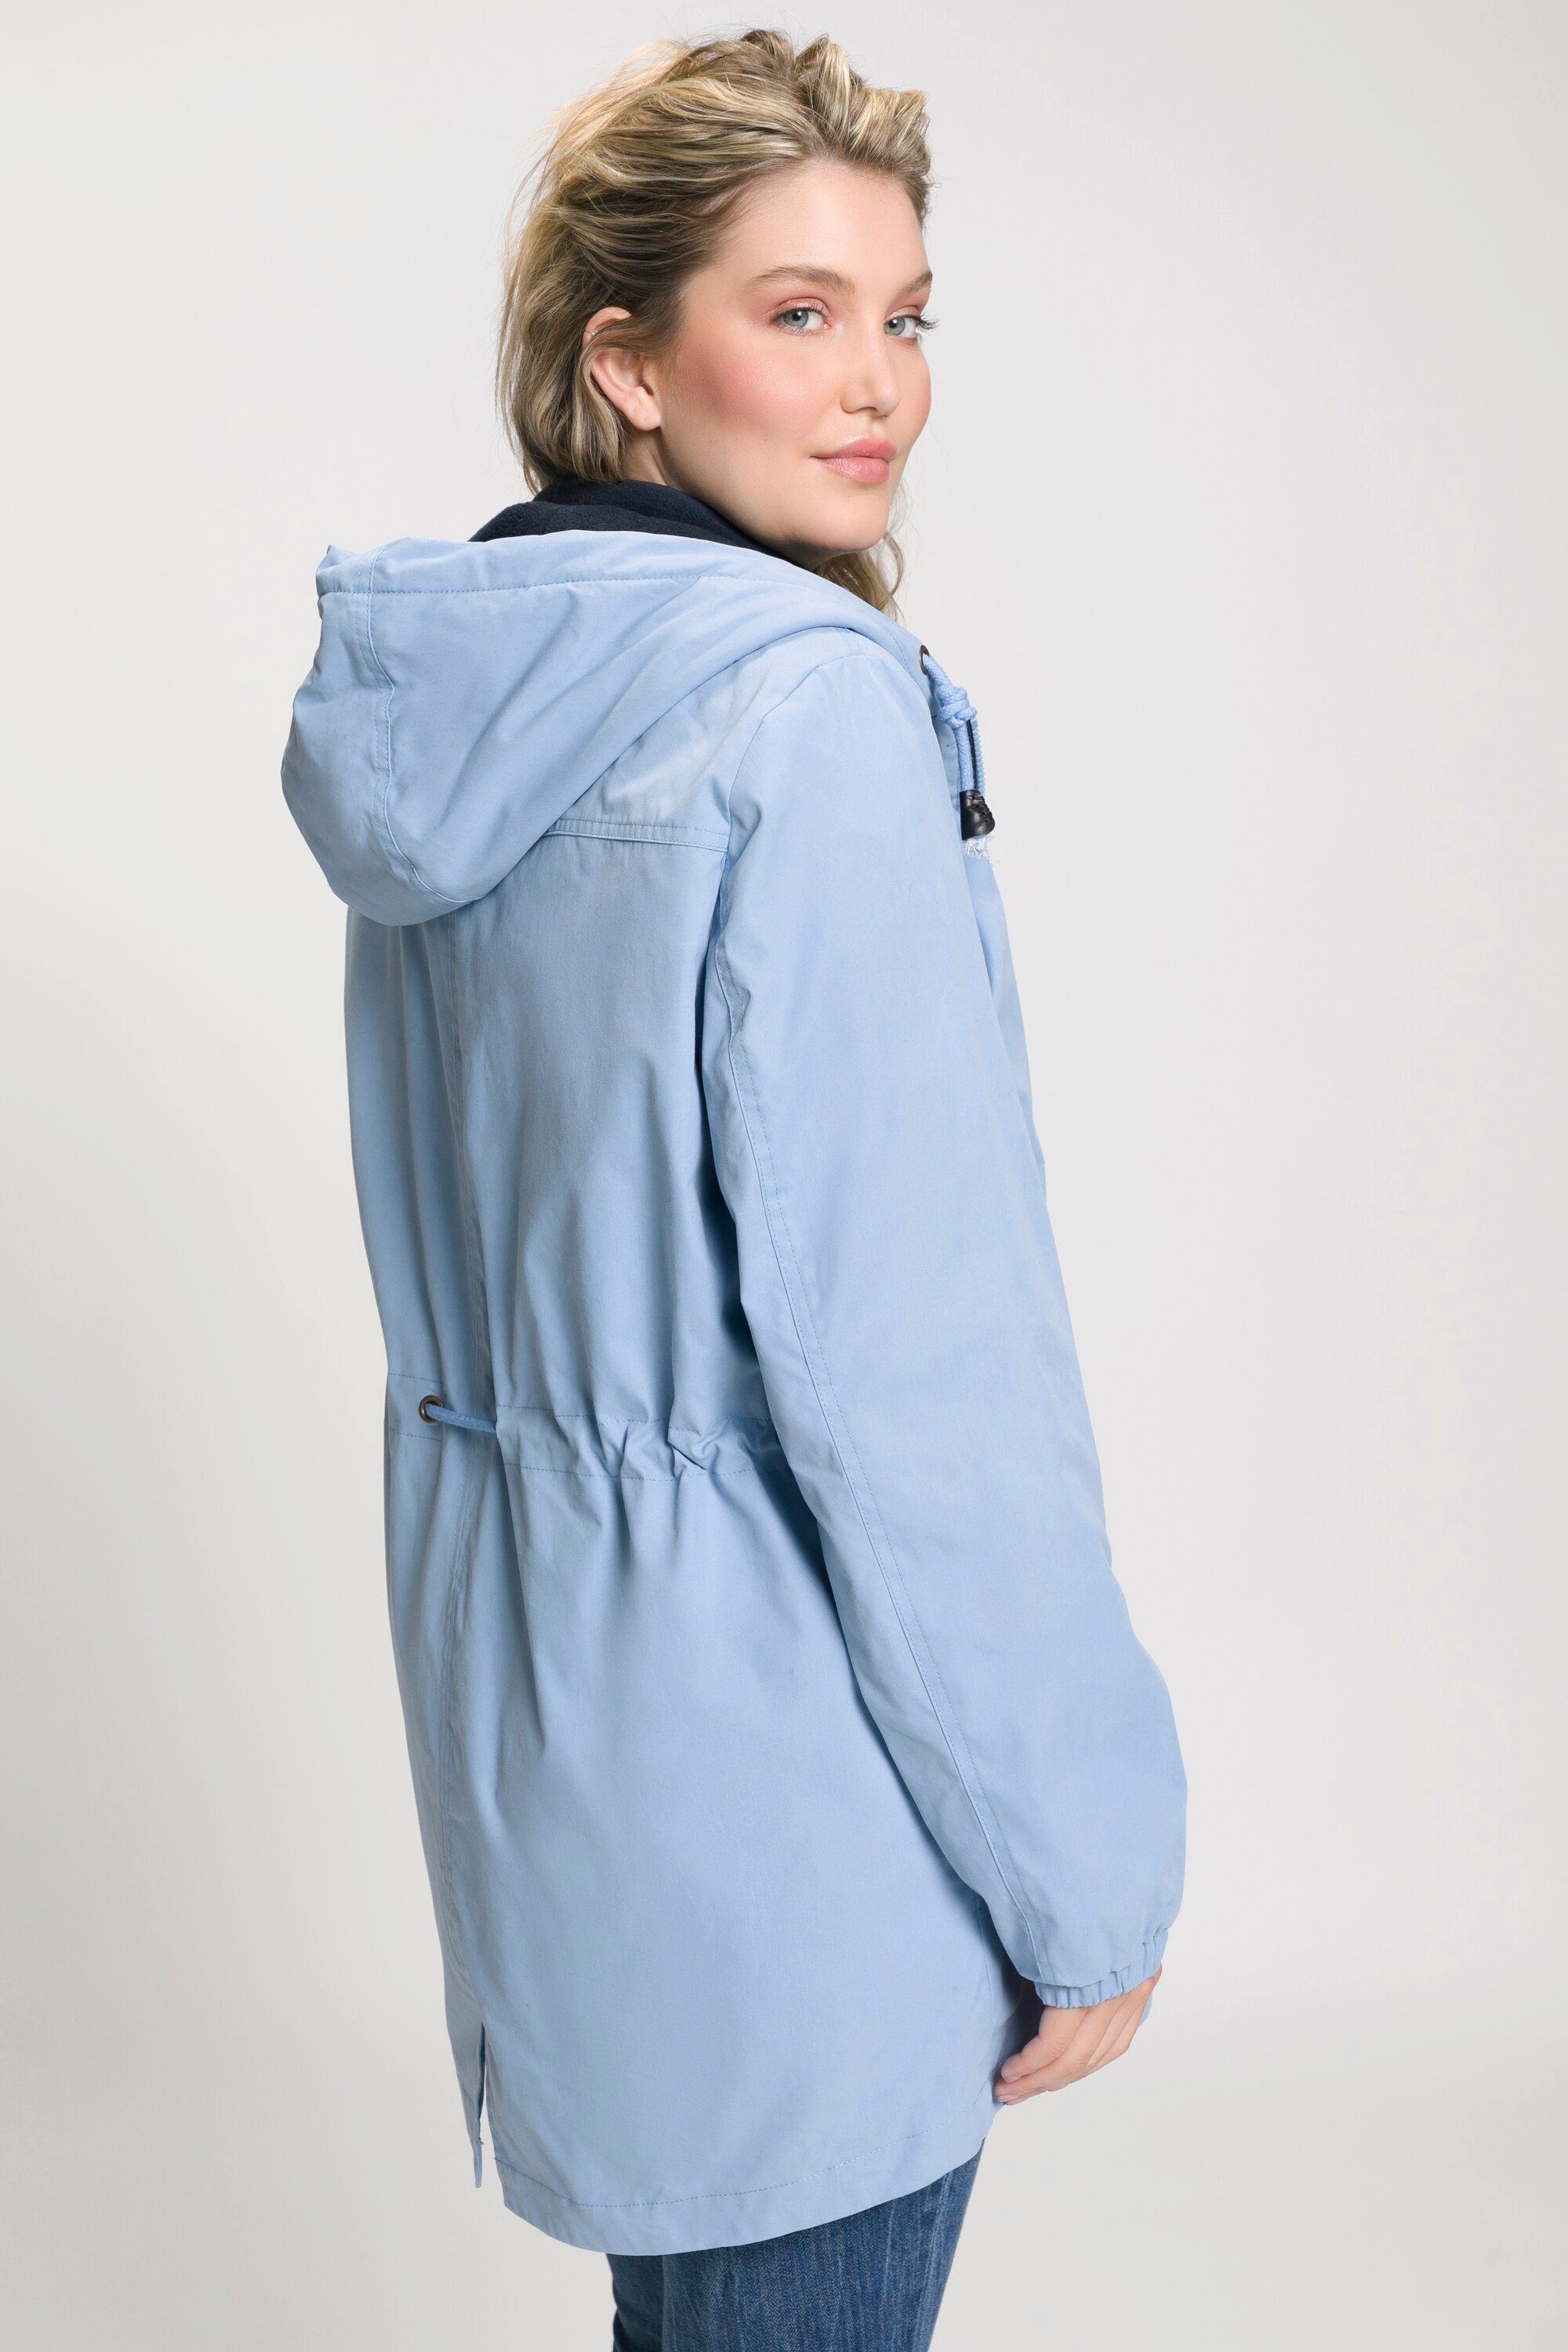 2-in1-Jacke helles blau Popken HYPRAR wasserabweisend mit Fleeceweste Ulla Parka